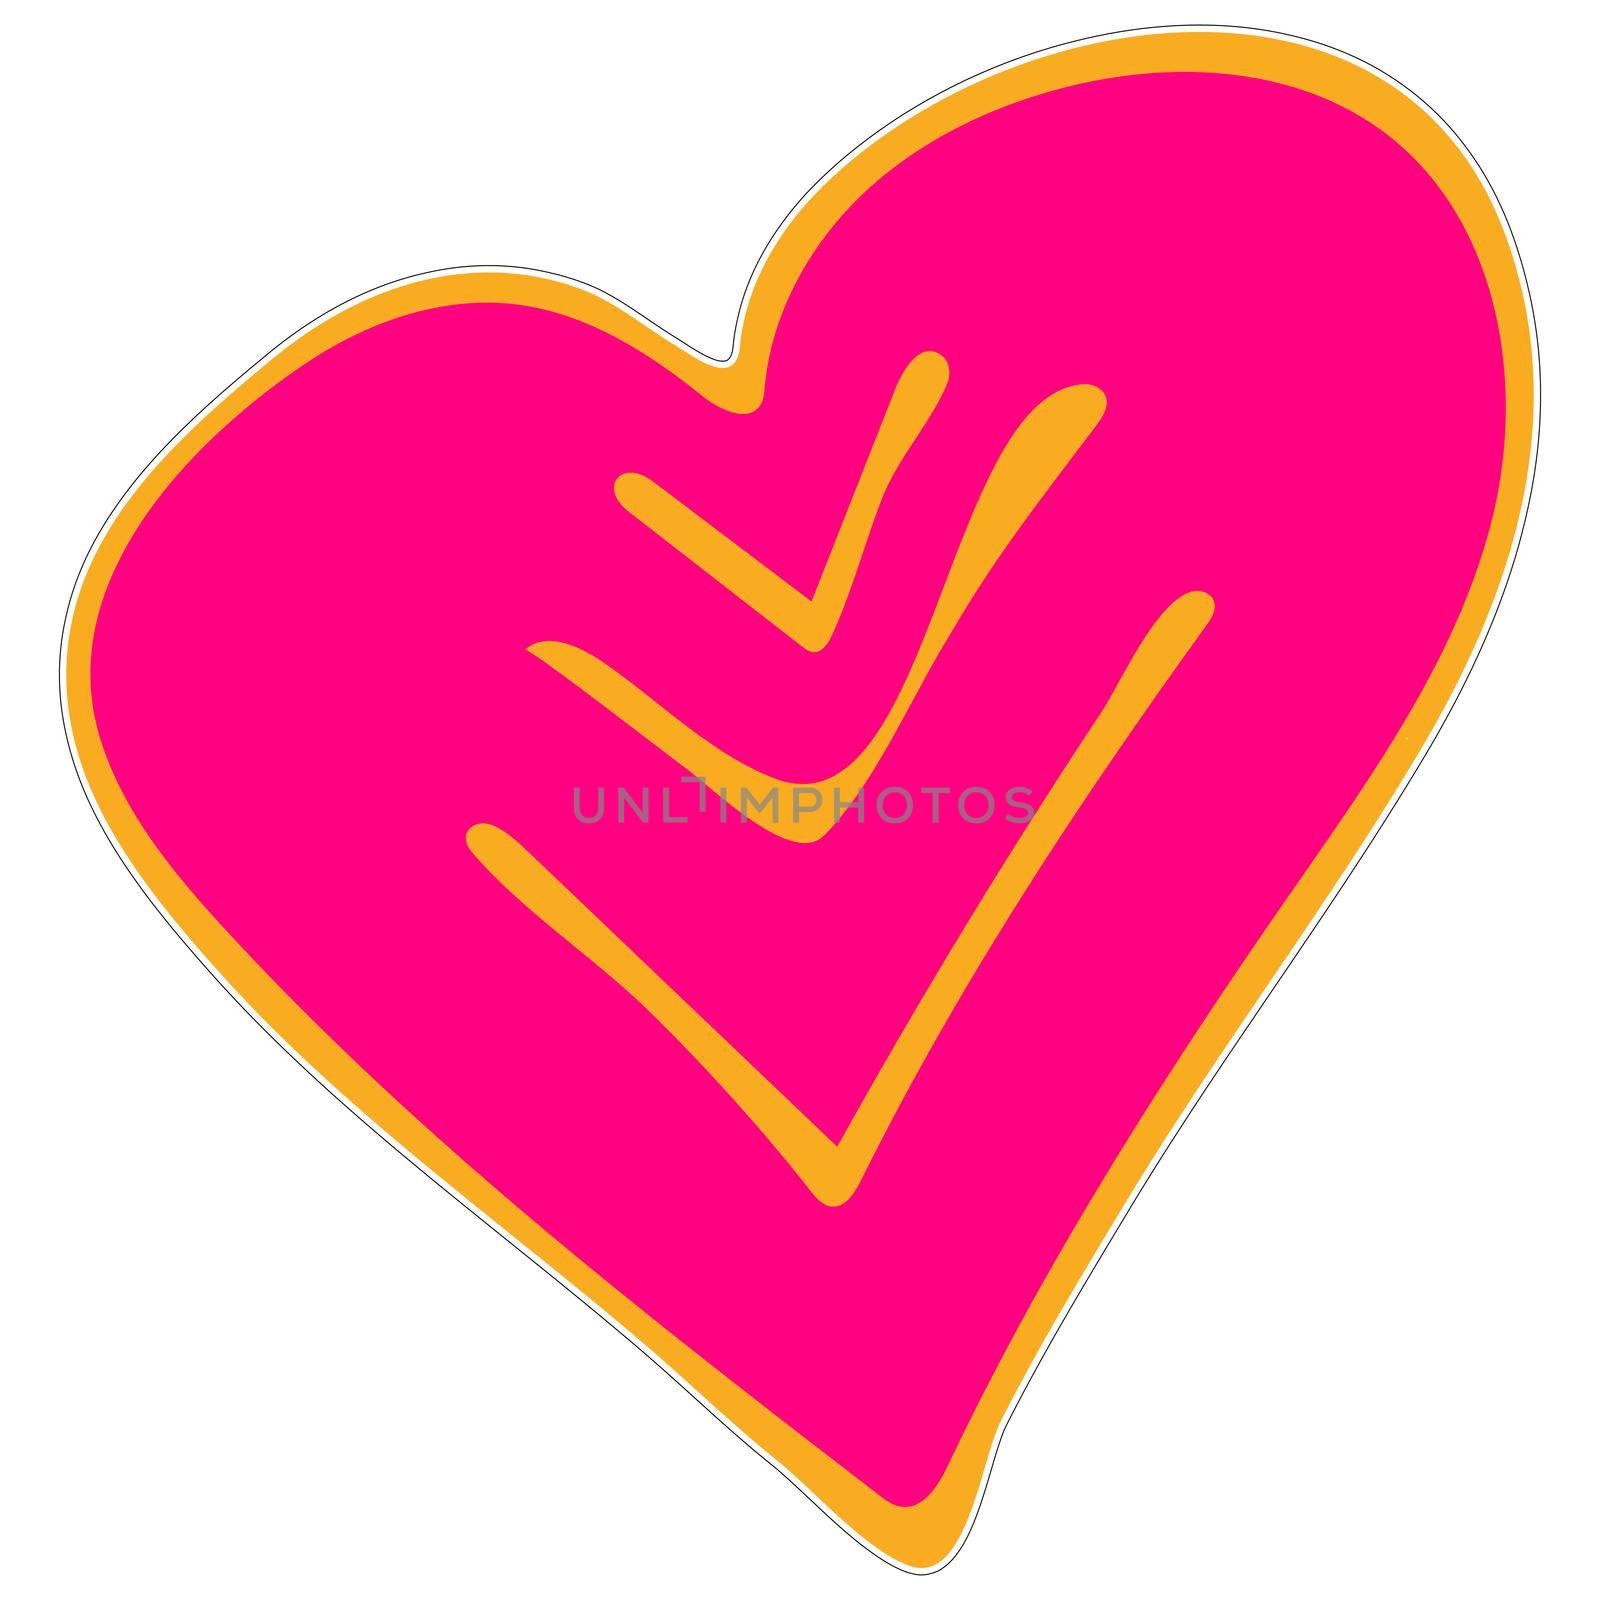 Hand Drawn Pink Heart. Printable Sticker. Day of the Dead, Dia de los Muertos.